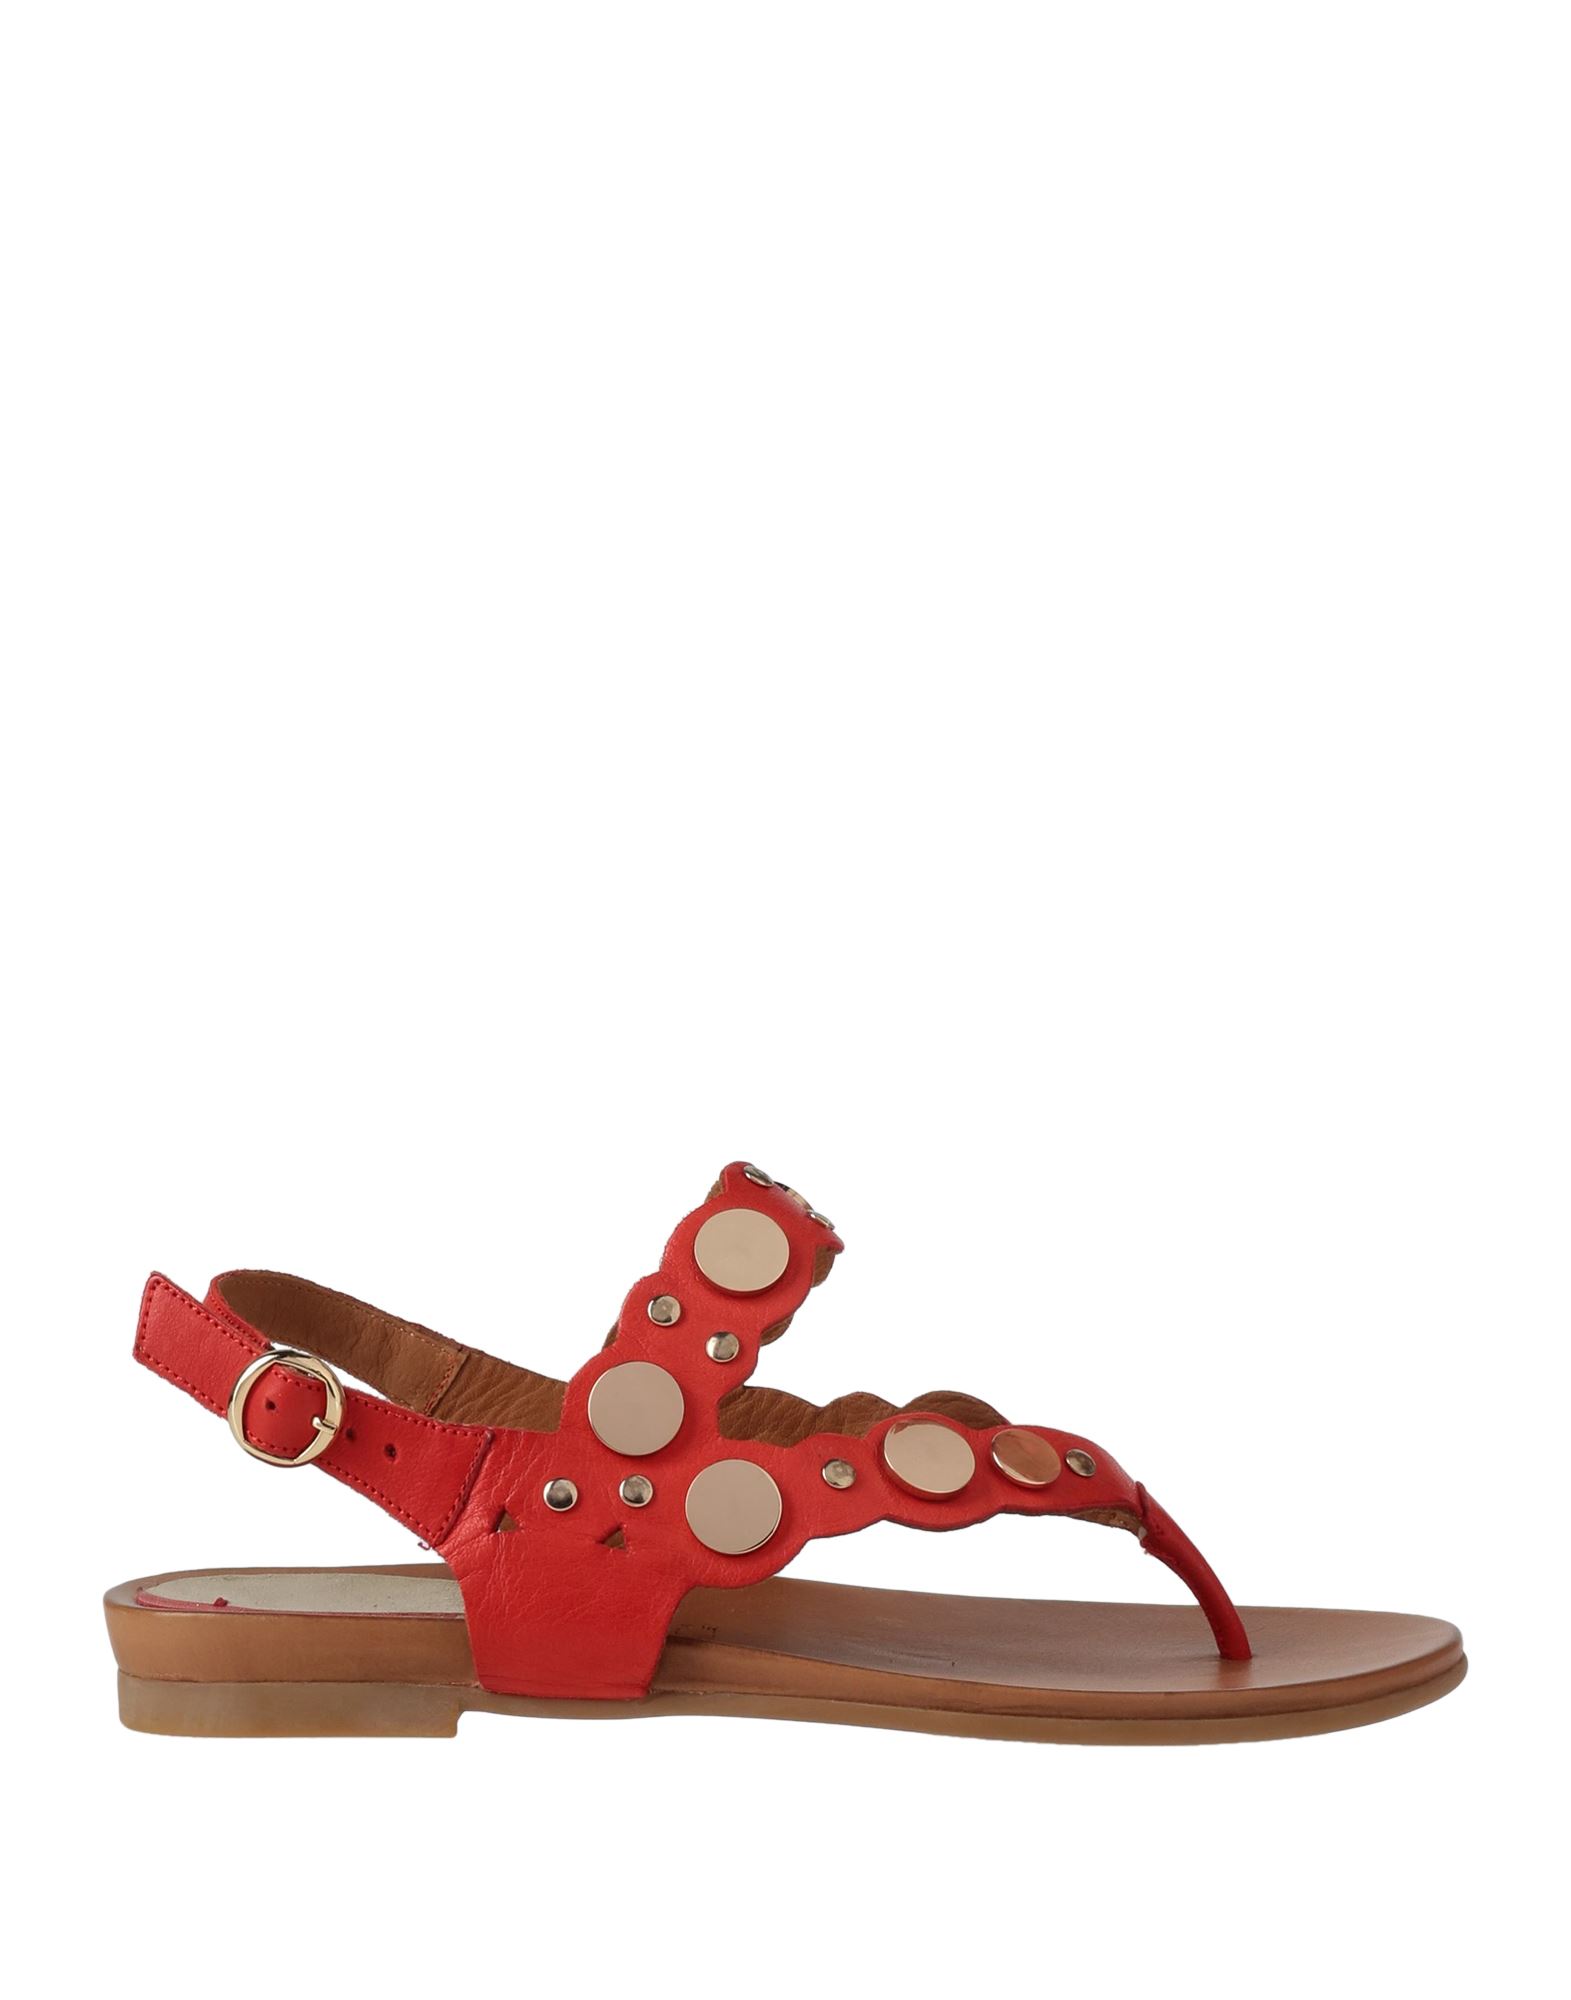 Cafènoir Woman Thong Sandal Tomato Red Size 7 Soft Leather